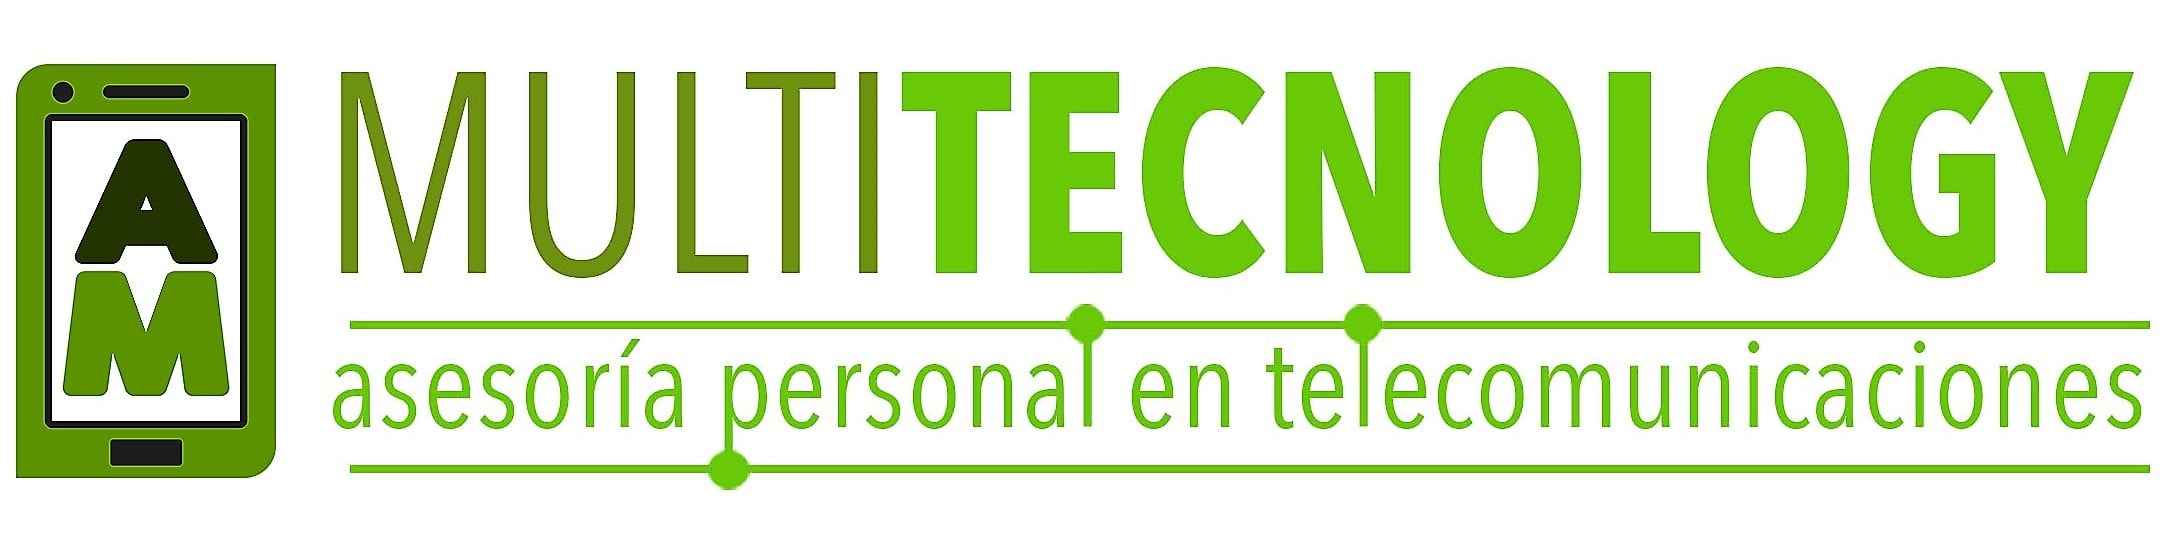 Asesoria Personal De Telecomunicaciones Multitecnology